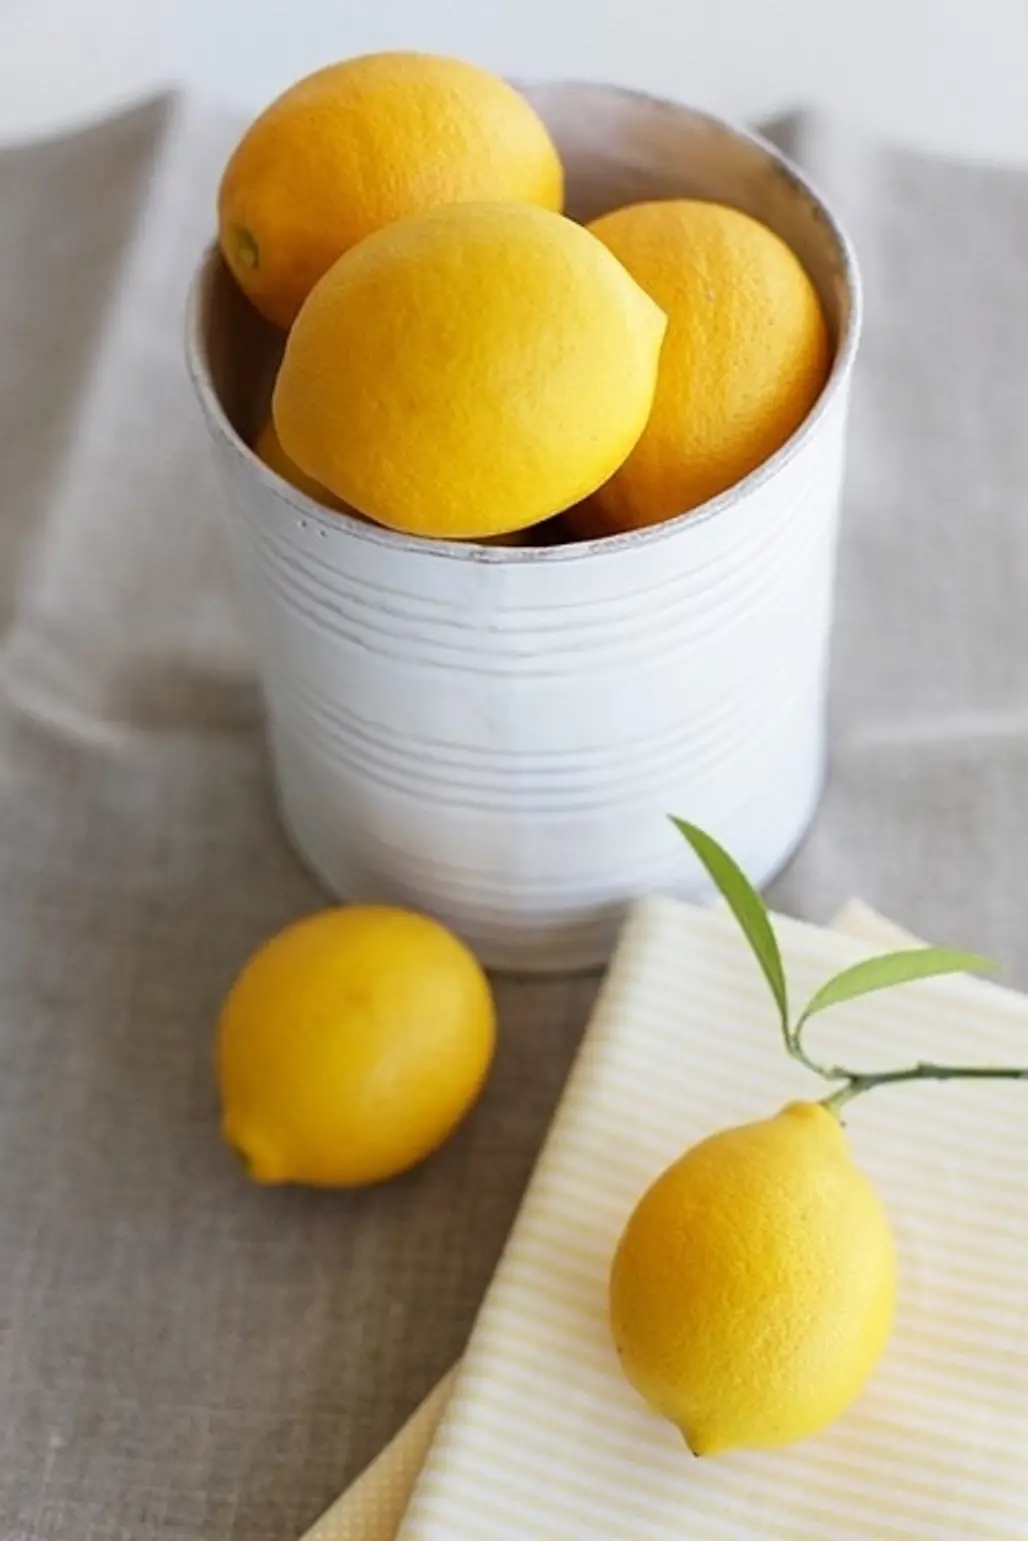 Use Your Lemons